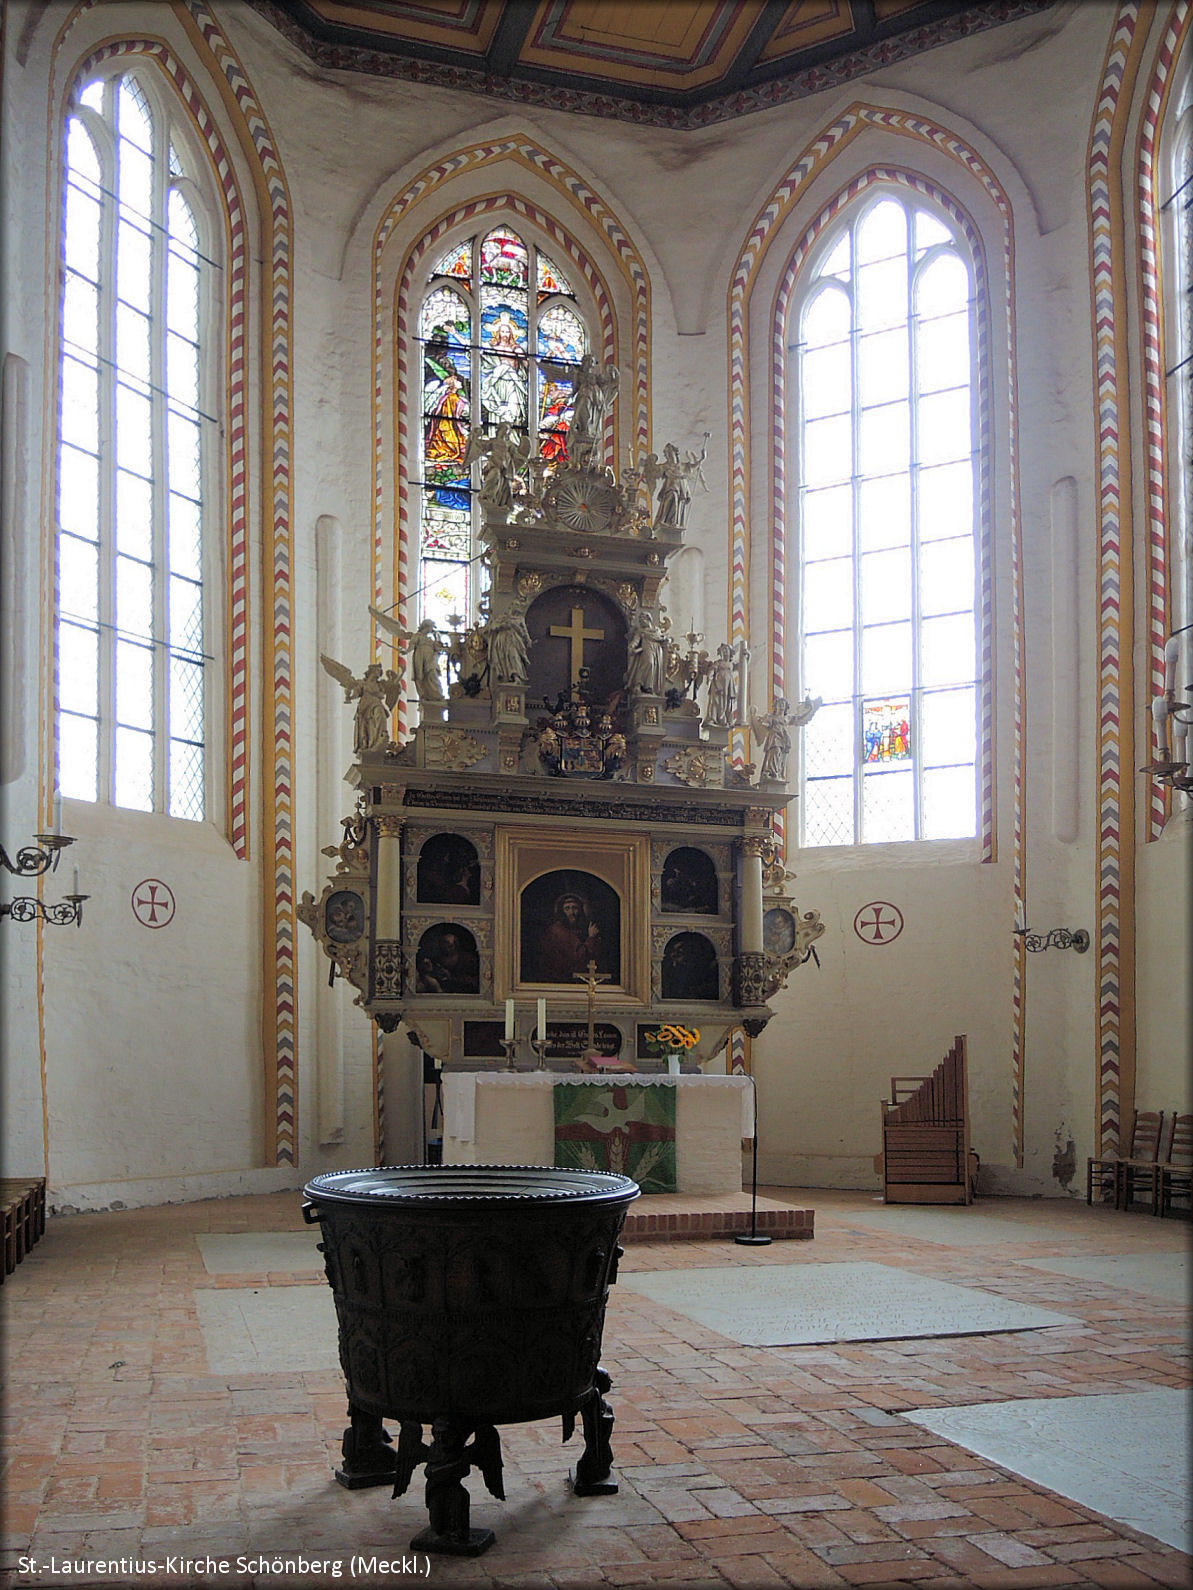 laurentius-kirche schoenberg - 4364.jpg